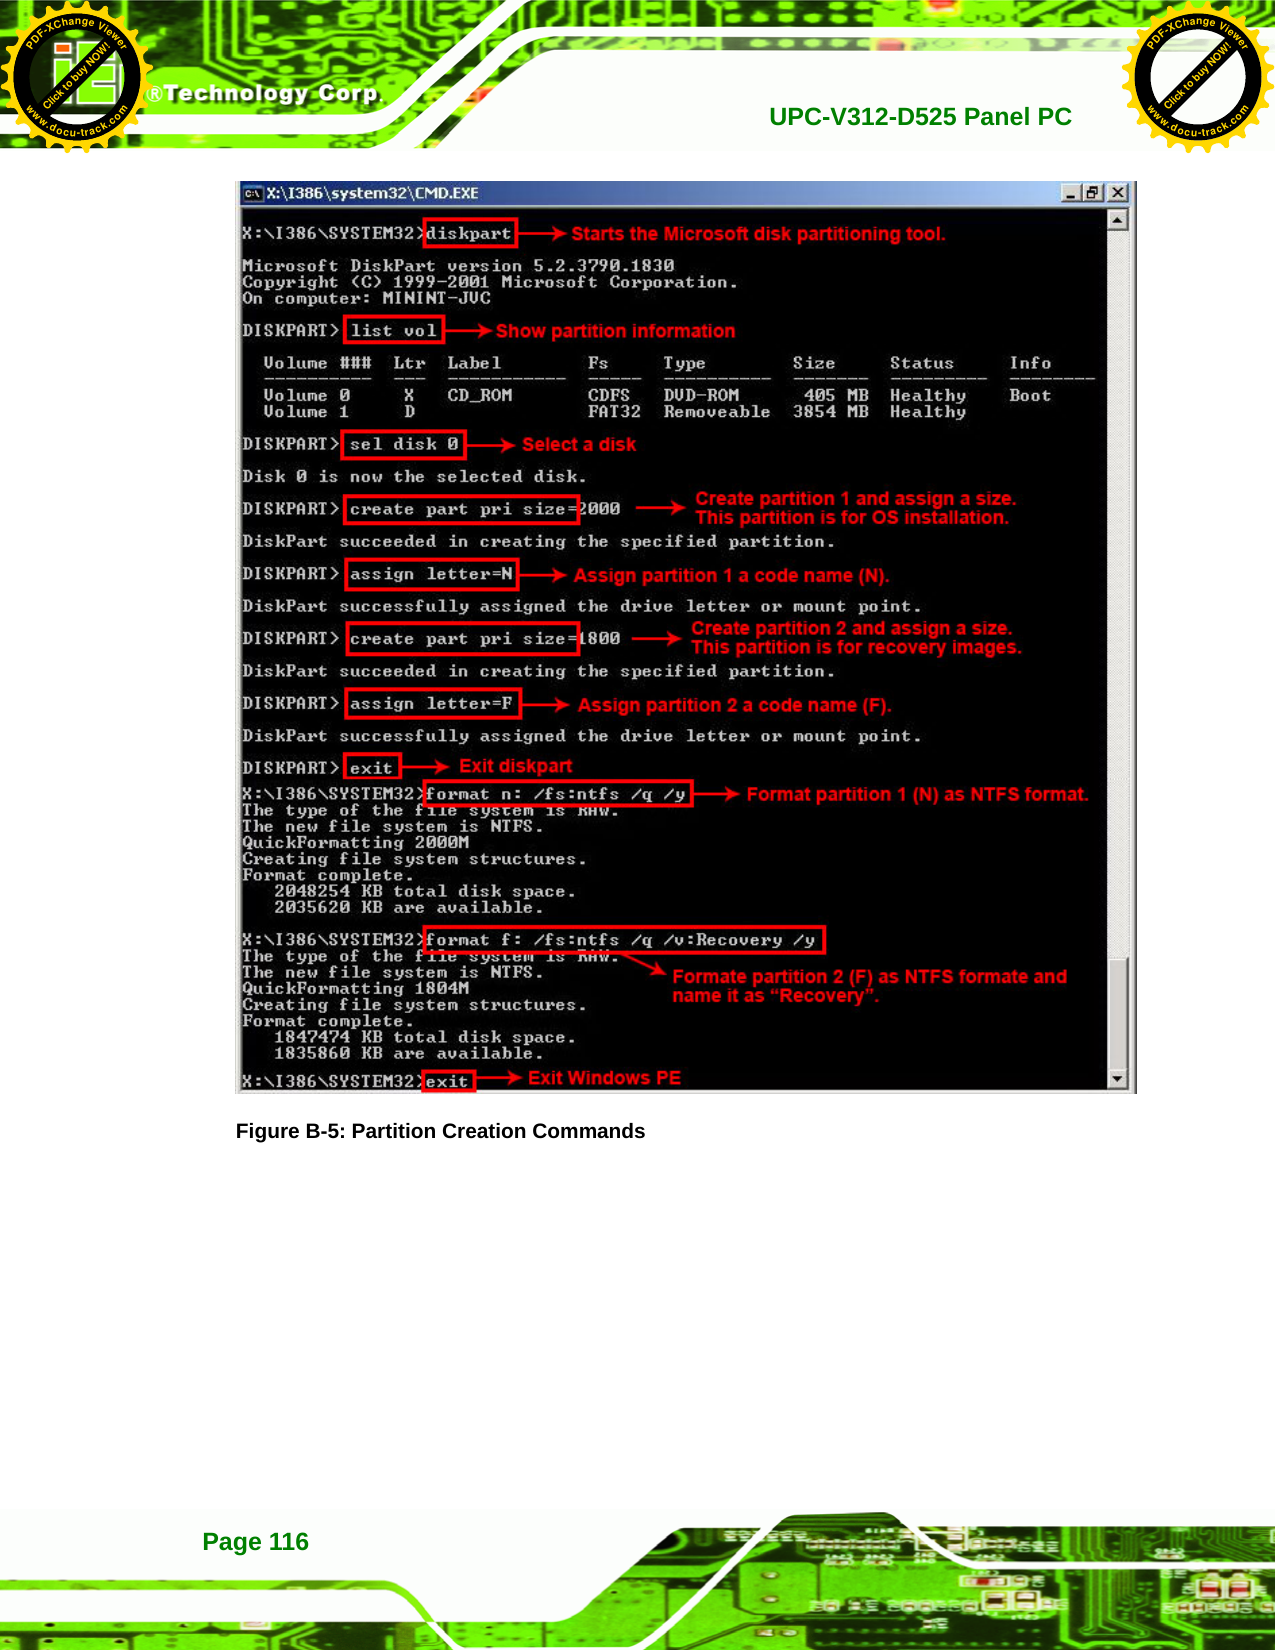   UPC-V312-D525 Panel PCPage 116  Figure B-5: Partition Creation Commands  Click to buy NOW!PDF-XChange Viewerwww.docu-track.comClick to buy NOW!PDF-XChange Viewerwww.docu-track.com